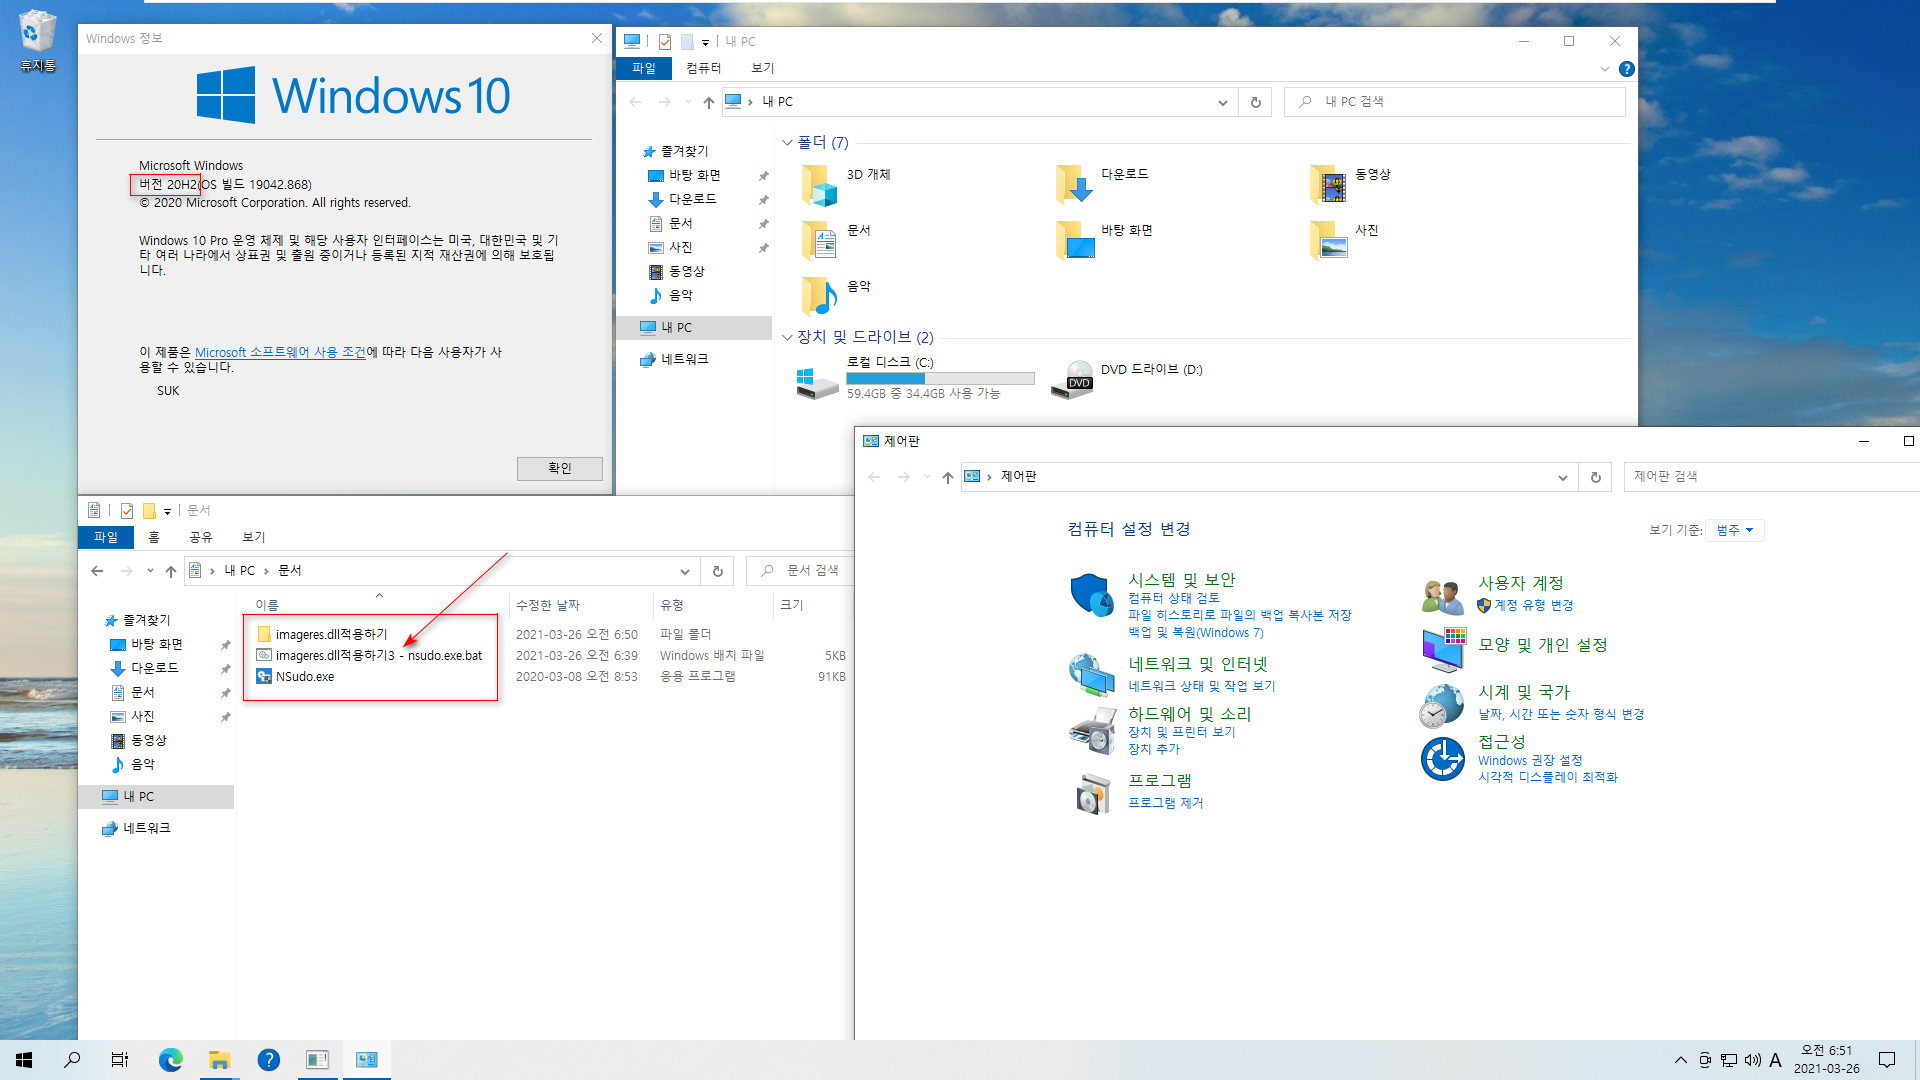 imageres.dll적용하기3 - nsudo.bat 테스트 - Windows 10 인사이더 프리뷰, 버전 21H2 추정, 빌드 21343.1000, PRO x64의 아이콘 적용하기 - 버전 21H1, 버전 20H2와 버전 2004까지 32비트 윈도우도 적용됩니다 2021-03-26_065129.jpg